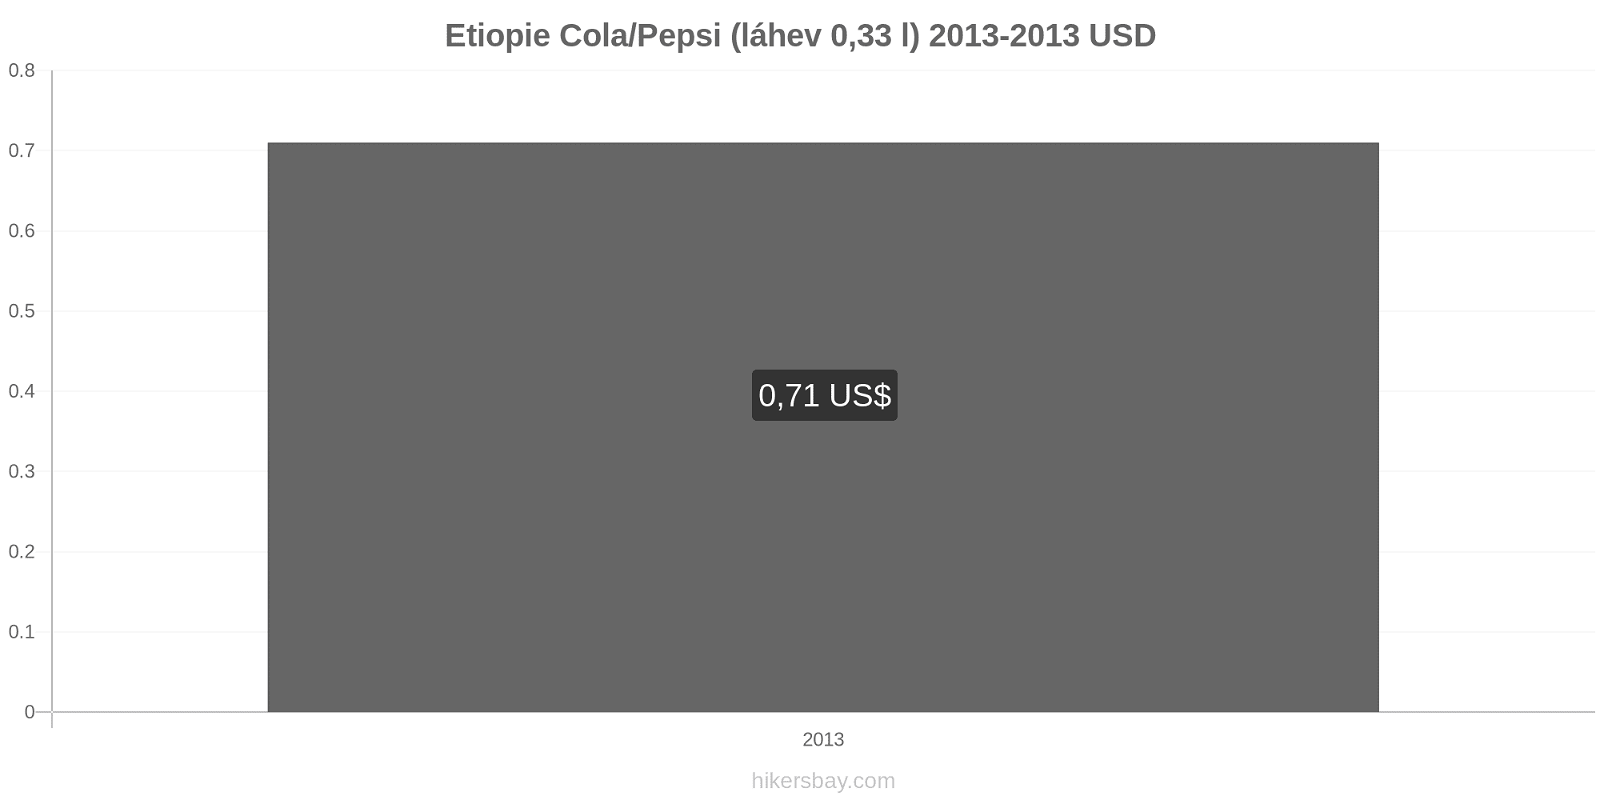 Etiopie změny cen Coca-Cola/Pepsi (láhev 0.33 l) hikersbay.com